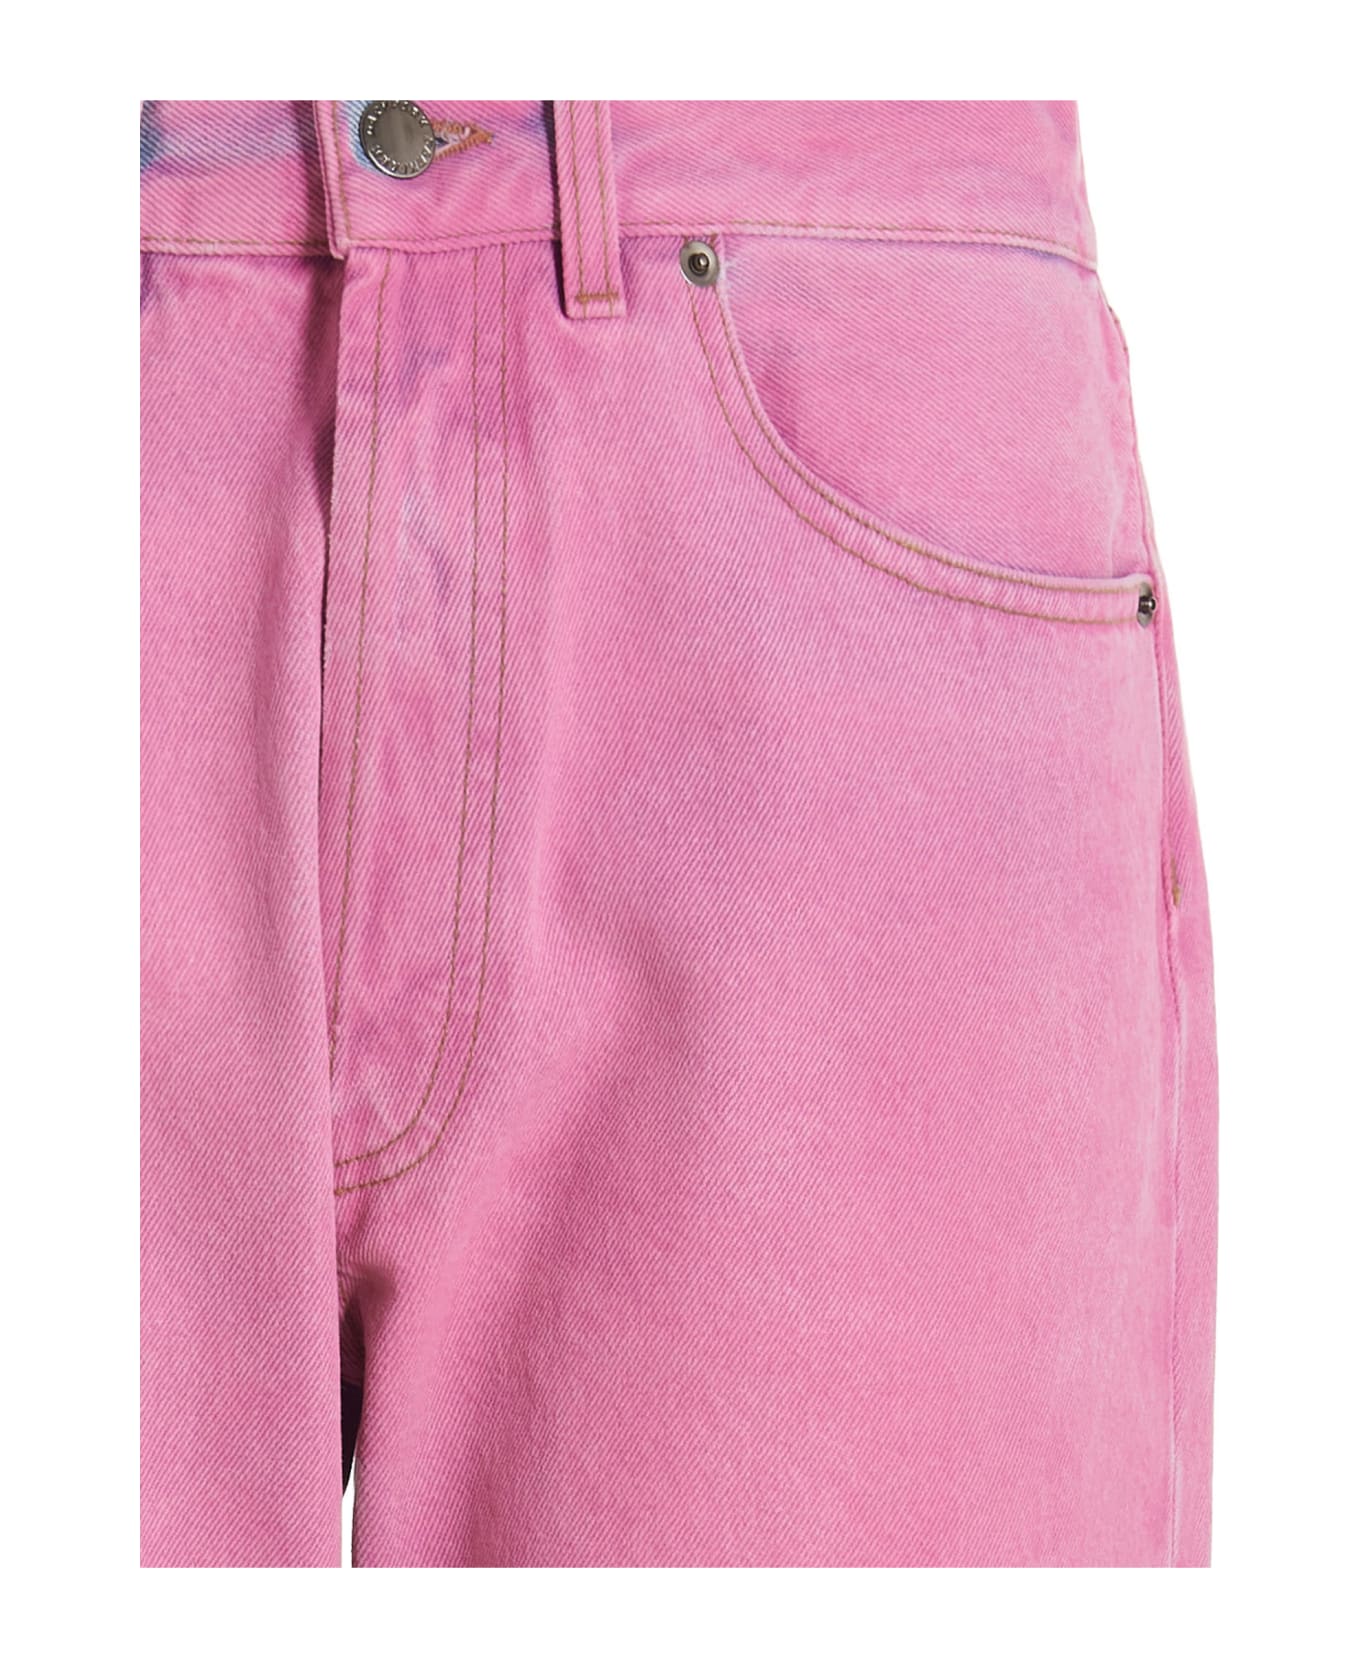 DARKPARK 'larry' Jeans - Pink